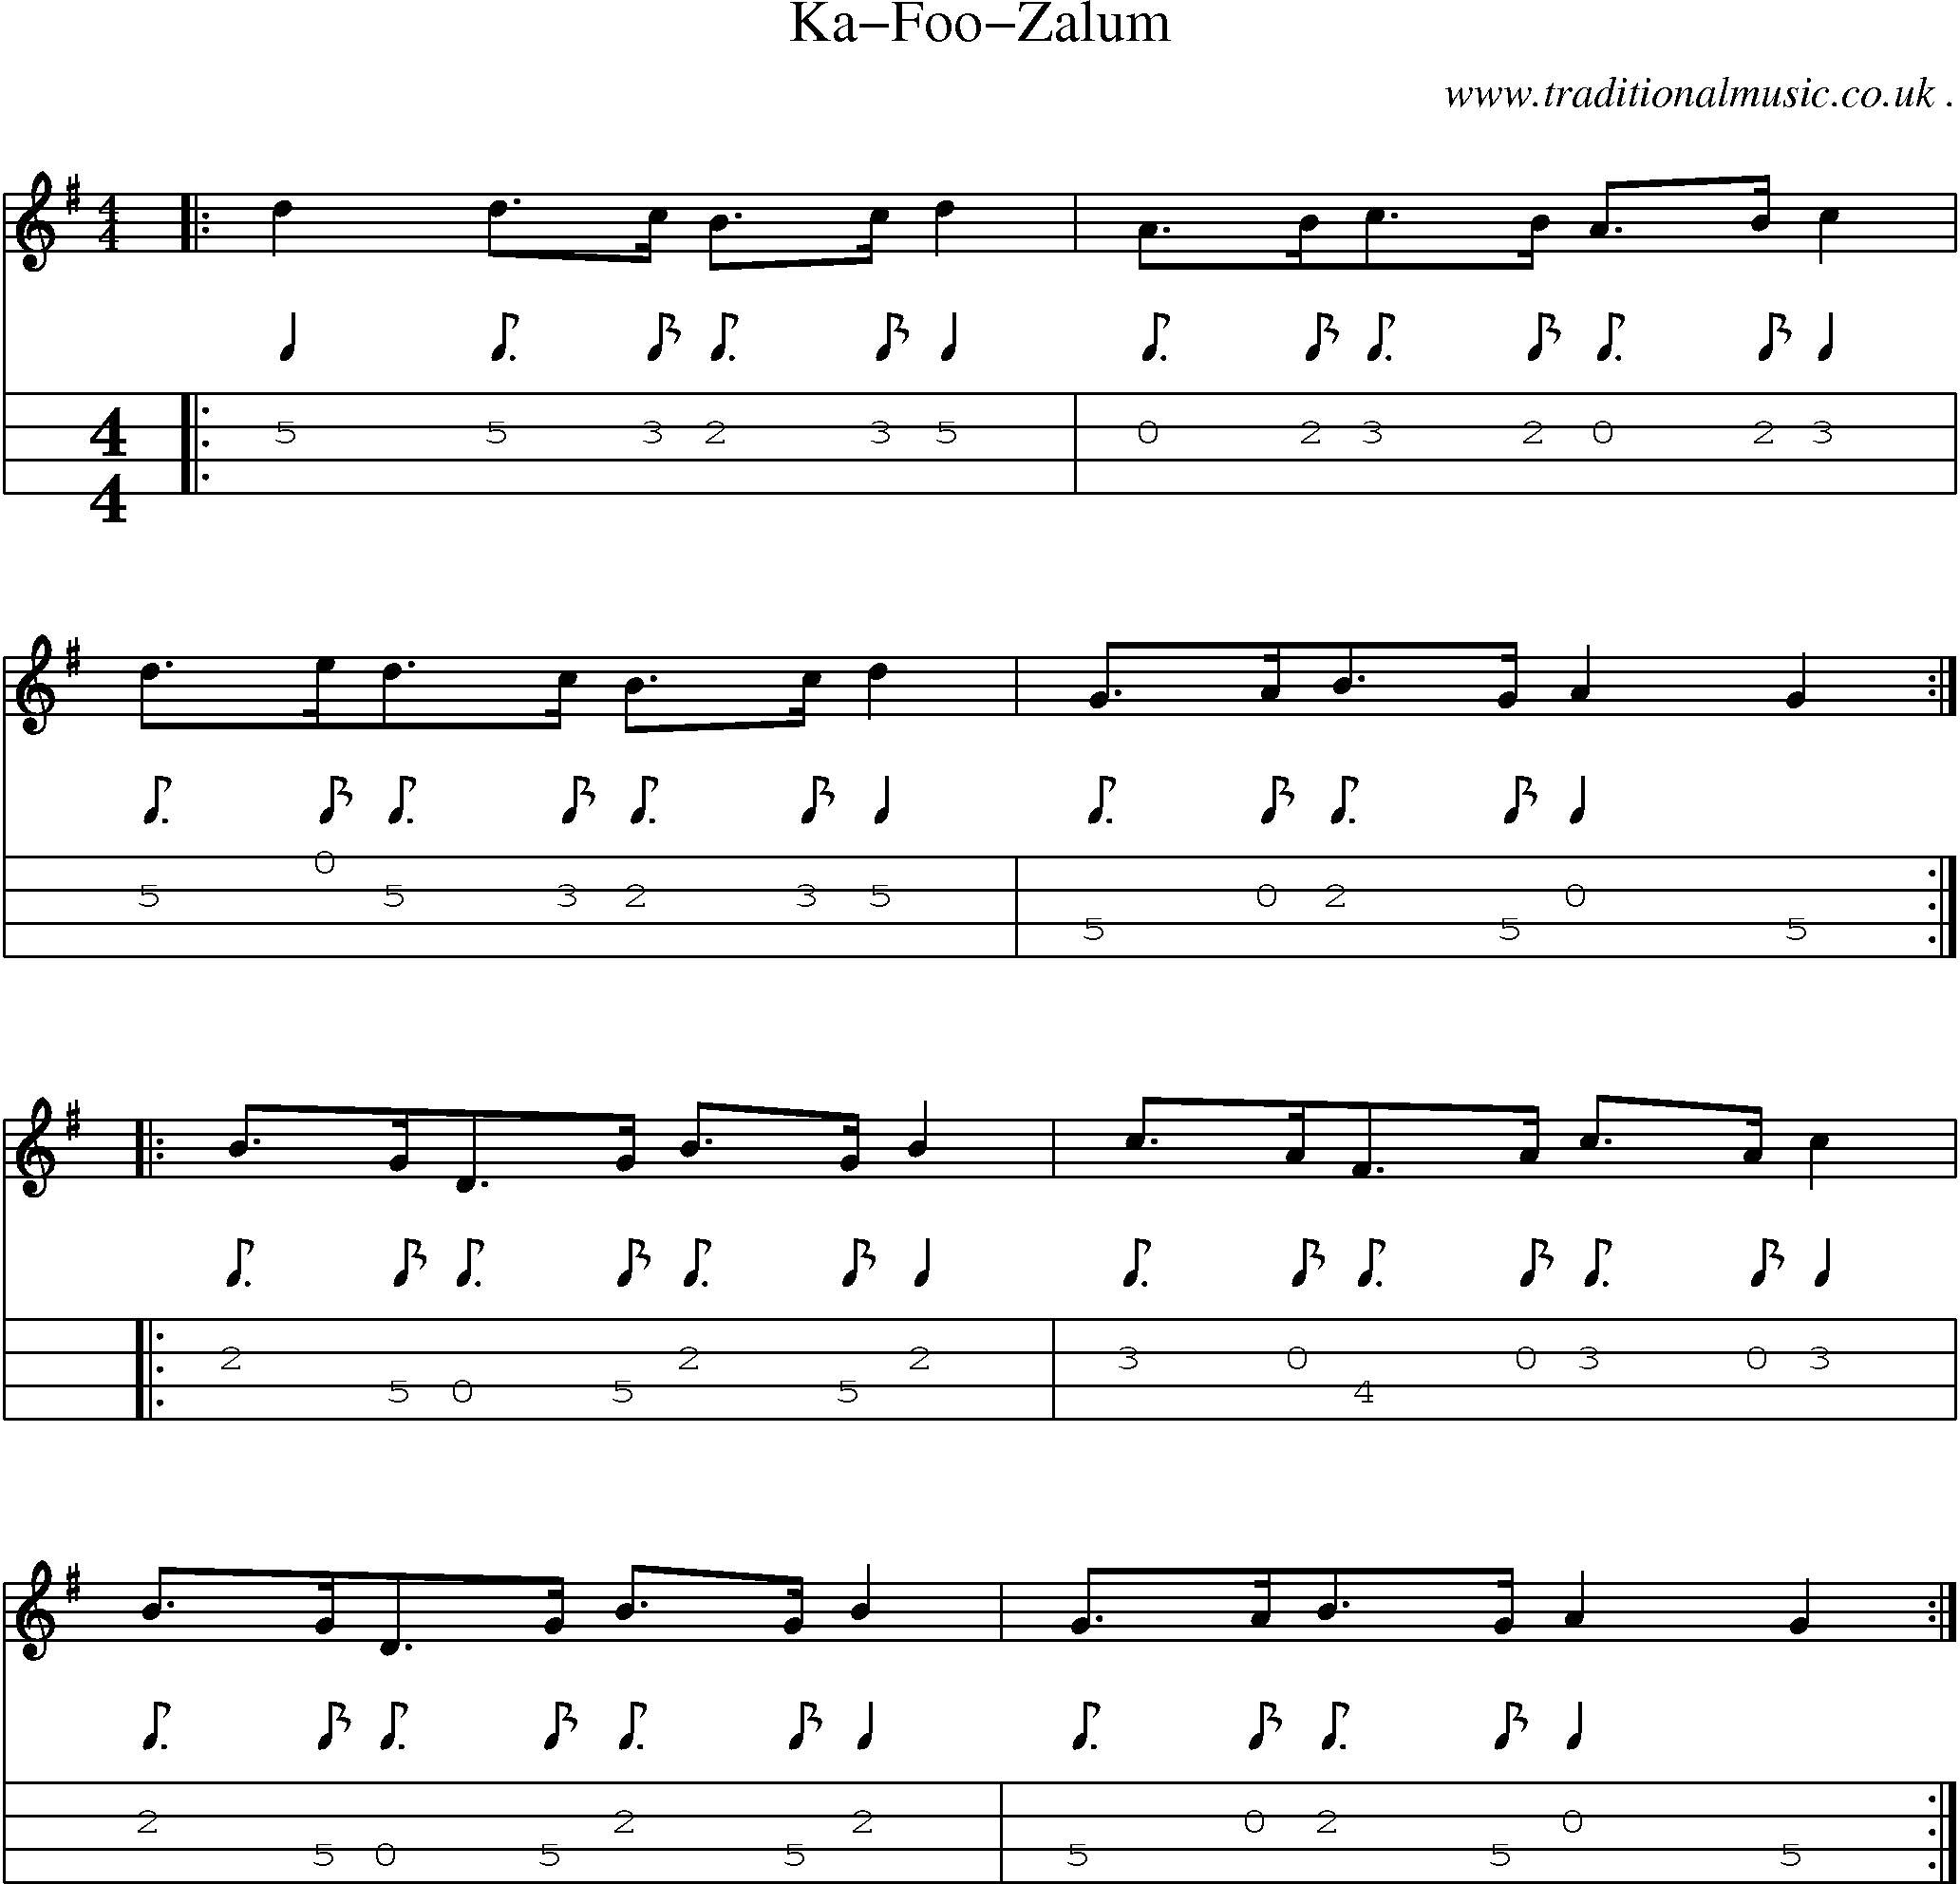 Sheet-Music and Mandolin Tabs for Ka-foo-zalum